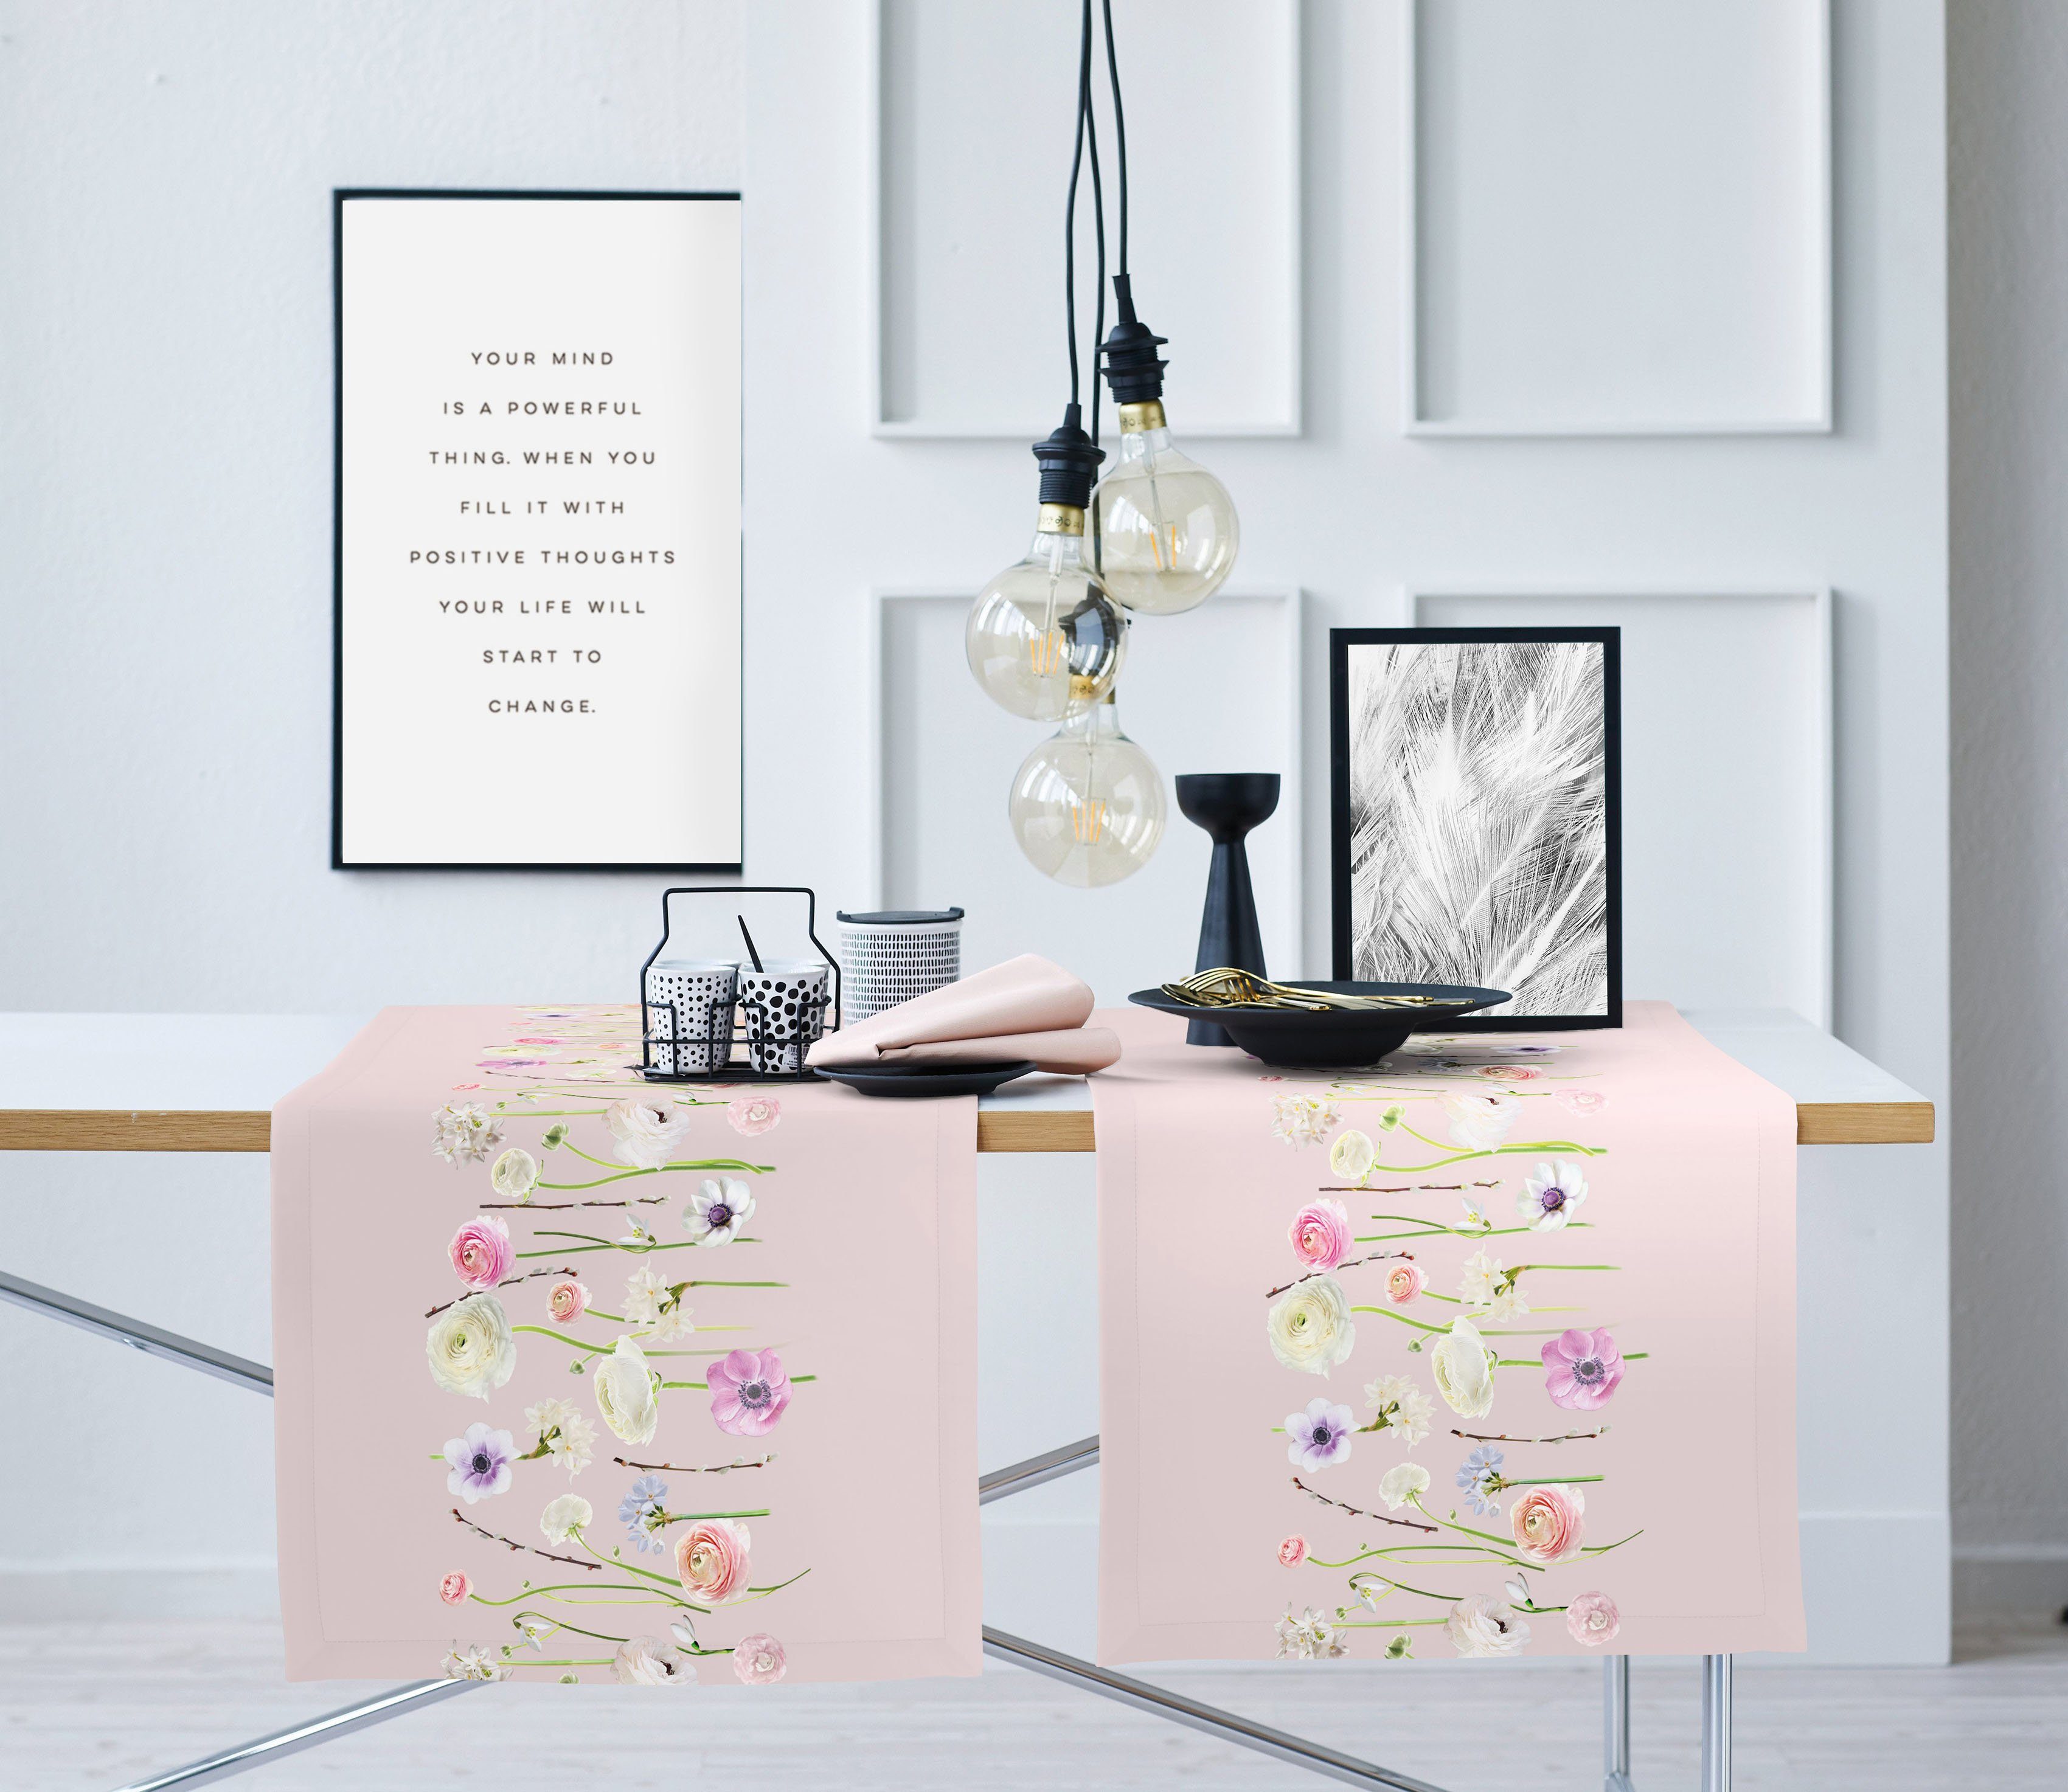 APELT Tischläufer rosa/bunt Frühjahrsdeko, Digitaldruck (1-tlg), 6403 SPRINGTIME, Frühling